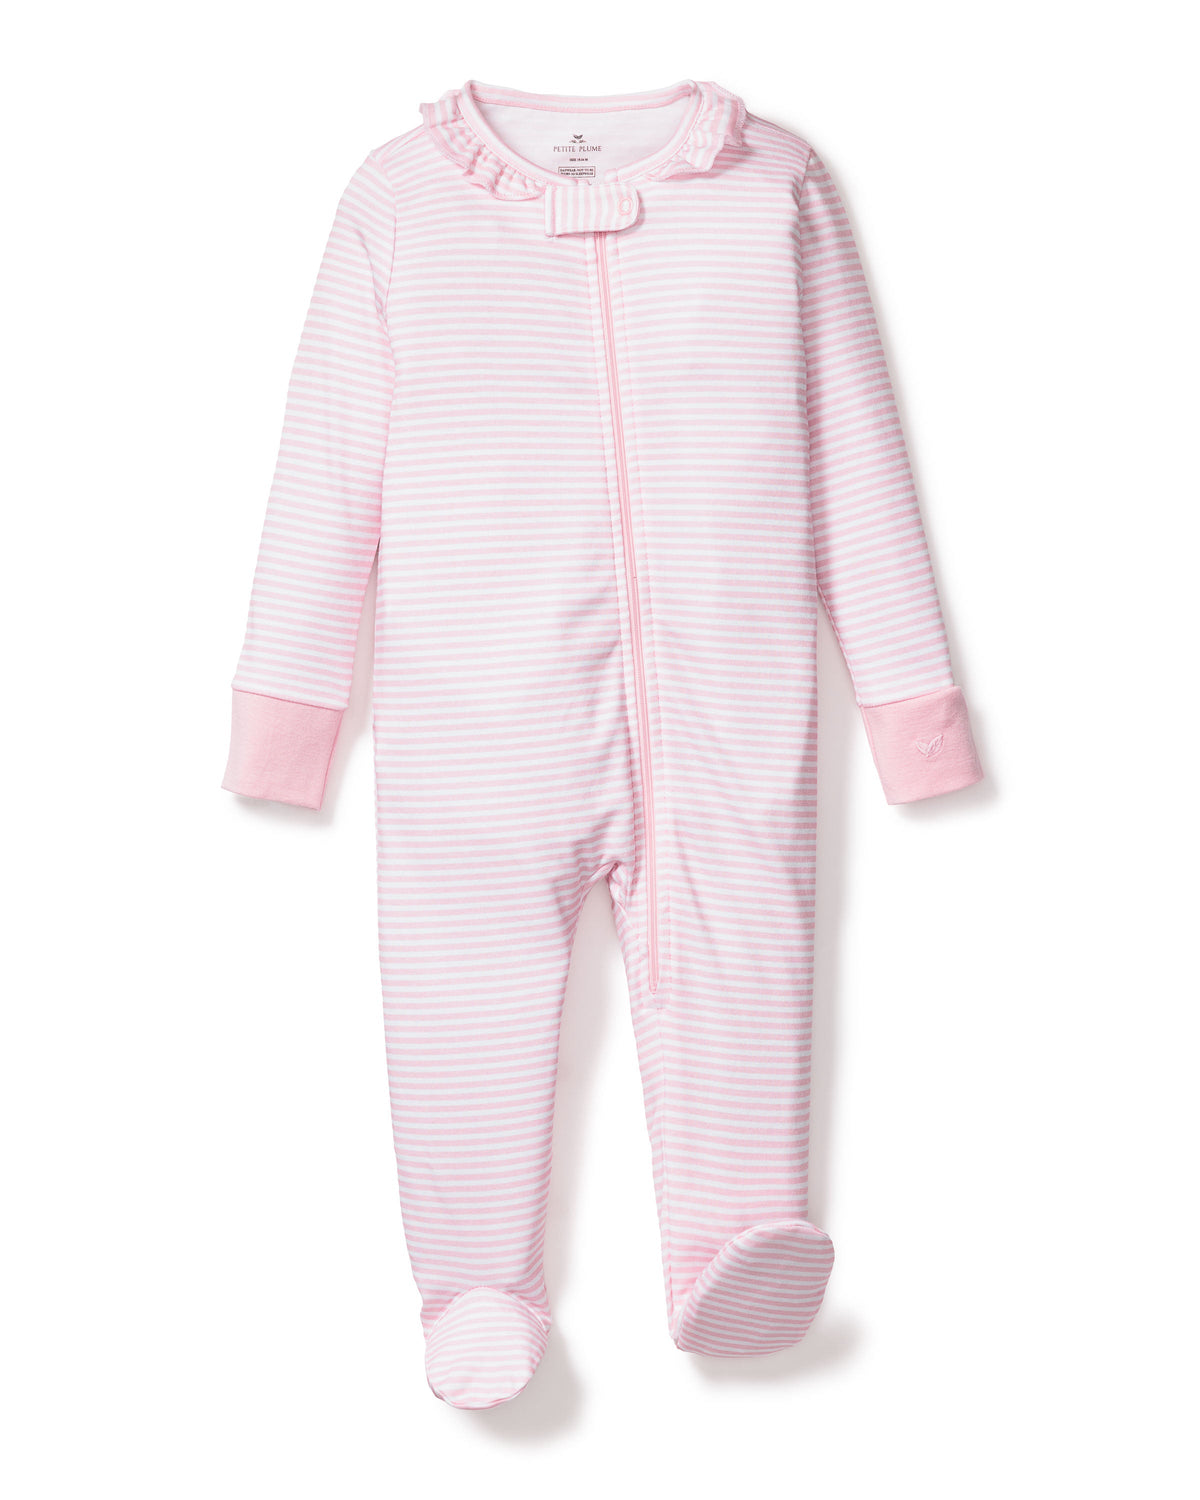 Children's Pima Snug Fit Pink Stripes Romper